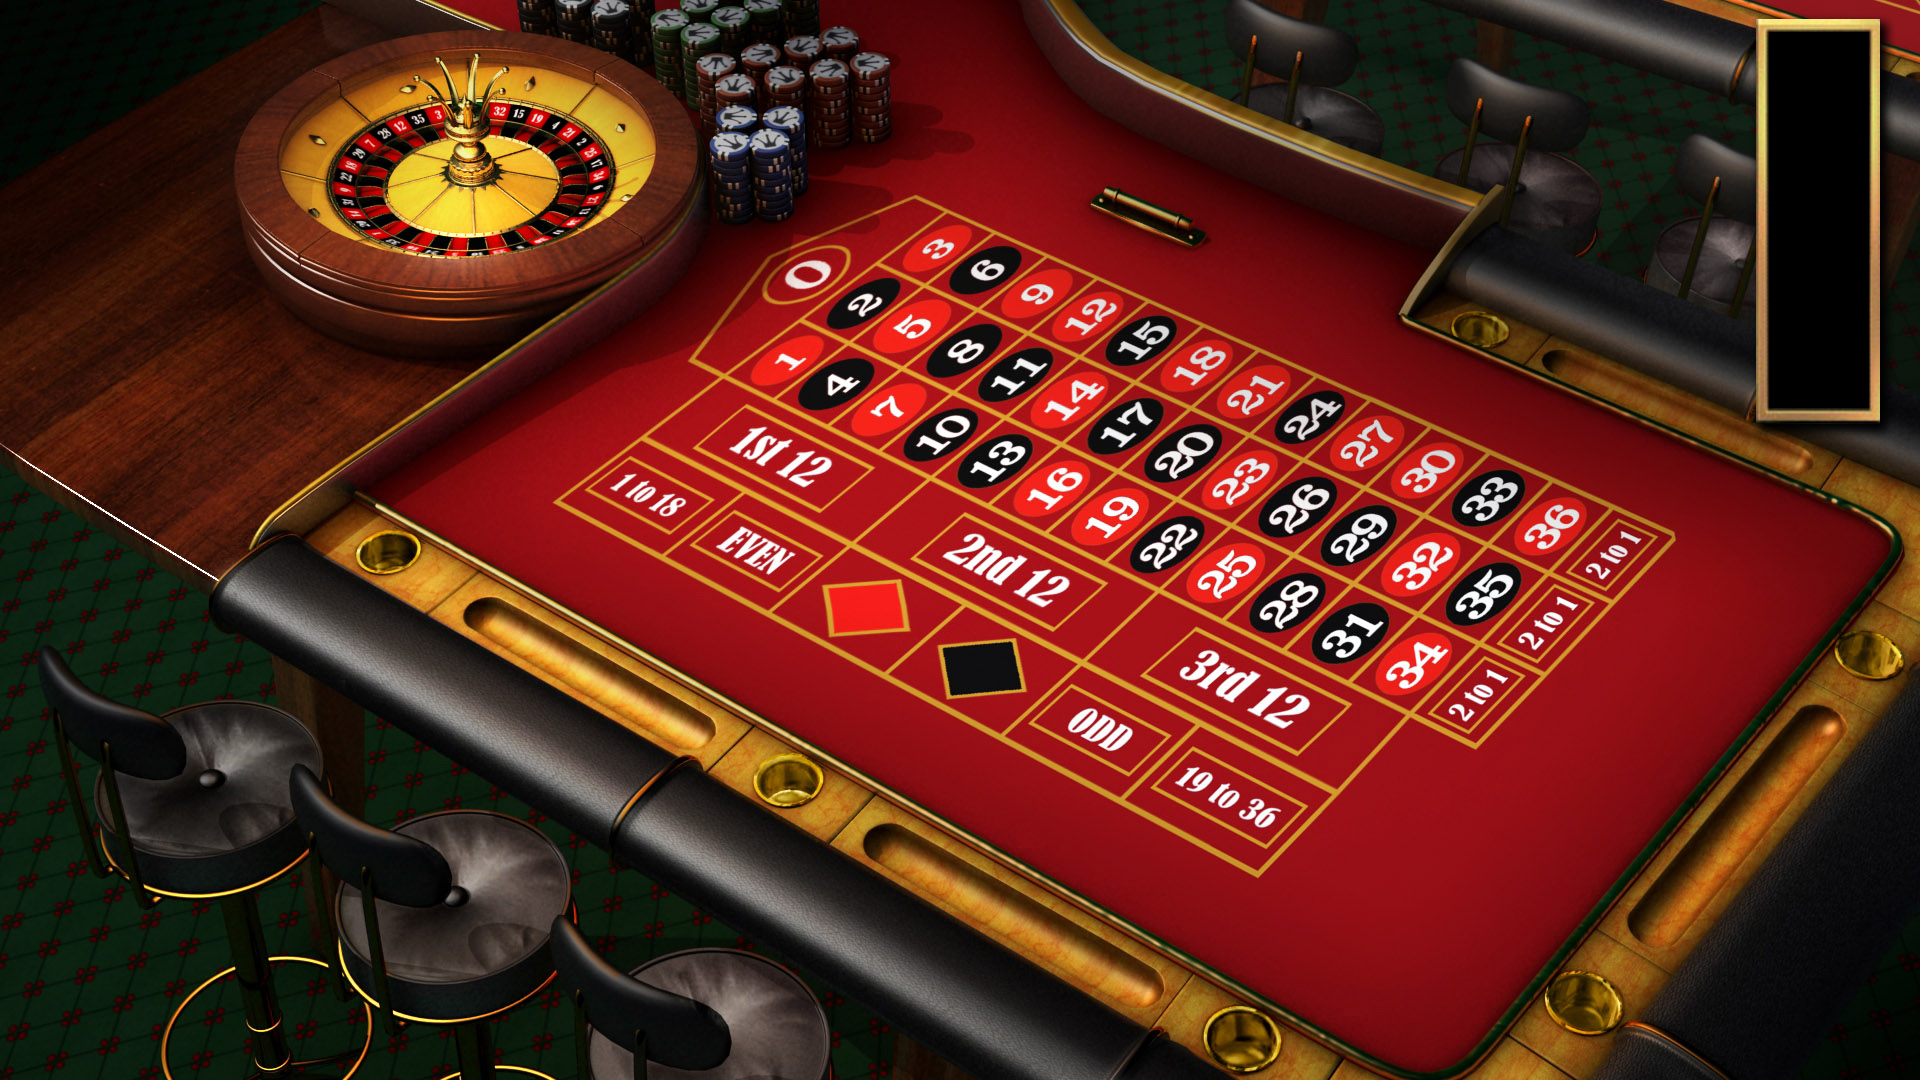 simple roulette gambling online